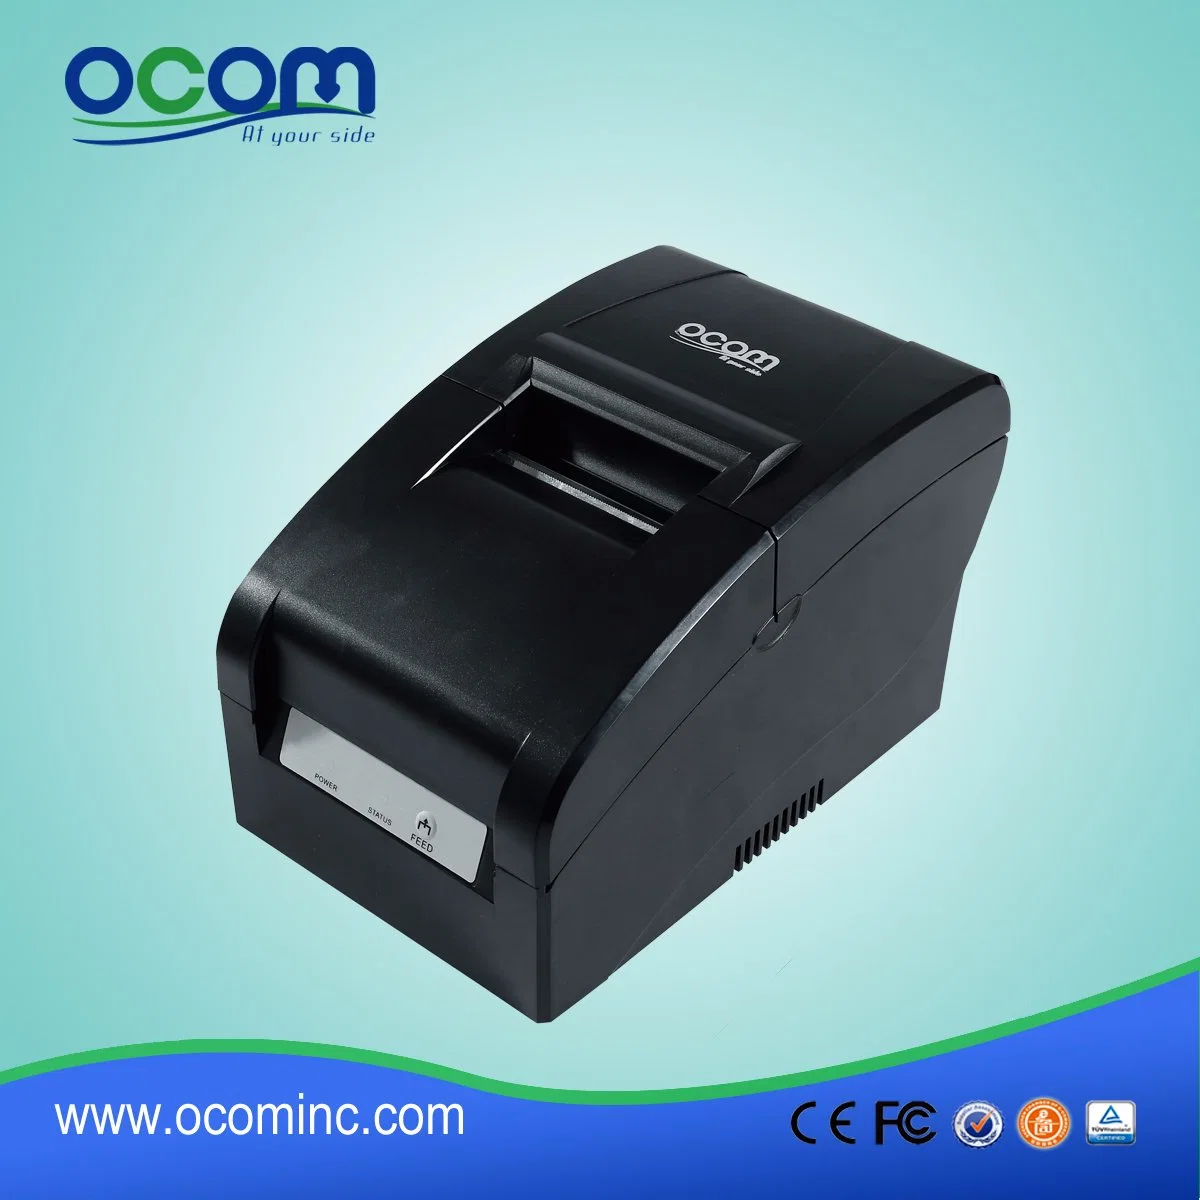 Ocpp-763-P 76mm DOT Matrix Printer Machine for Invoice Printing